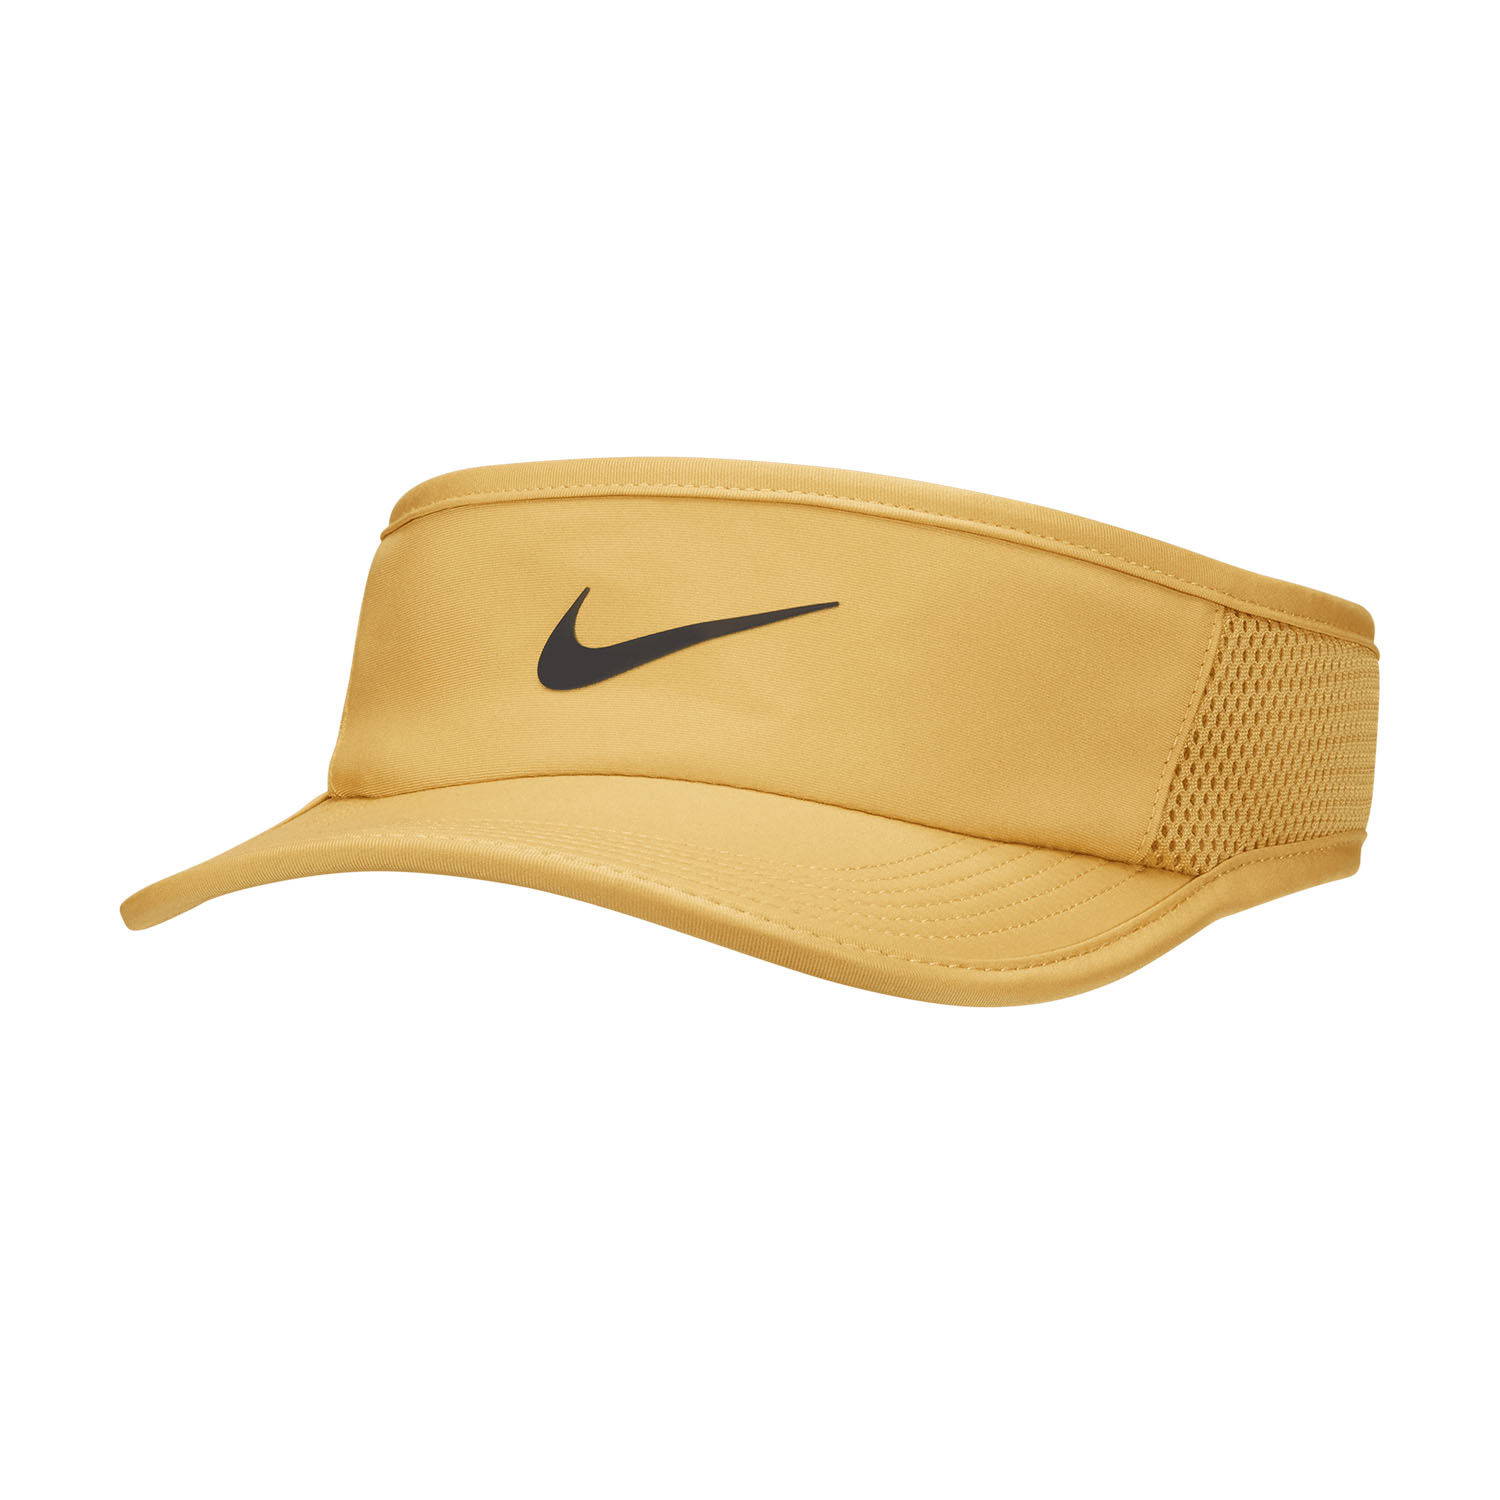 temerario Vigilante Adjunto archivo Nike Dri-FIT Aerobill Visera de Tenis - Wheat Gold/Black